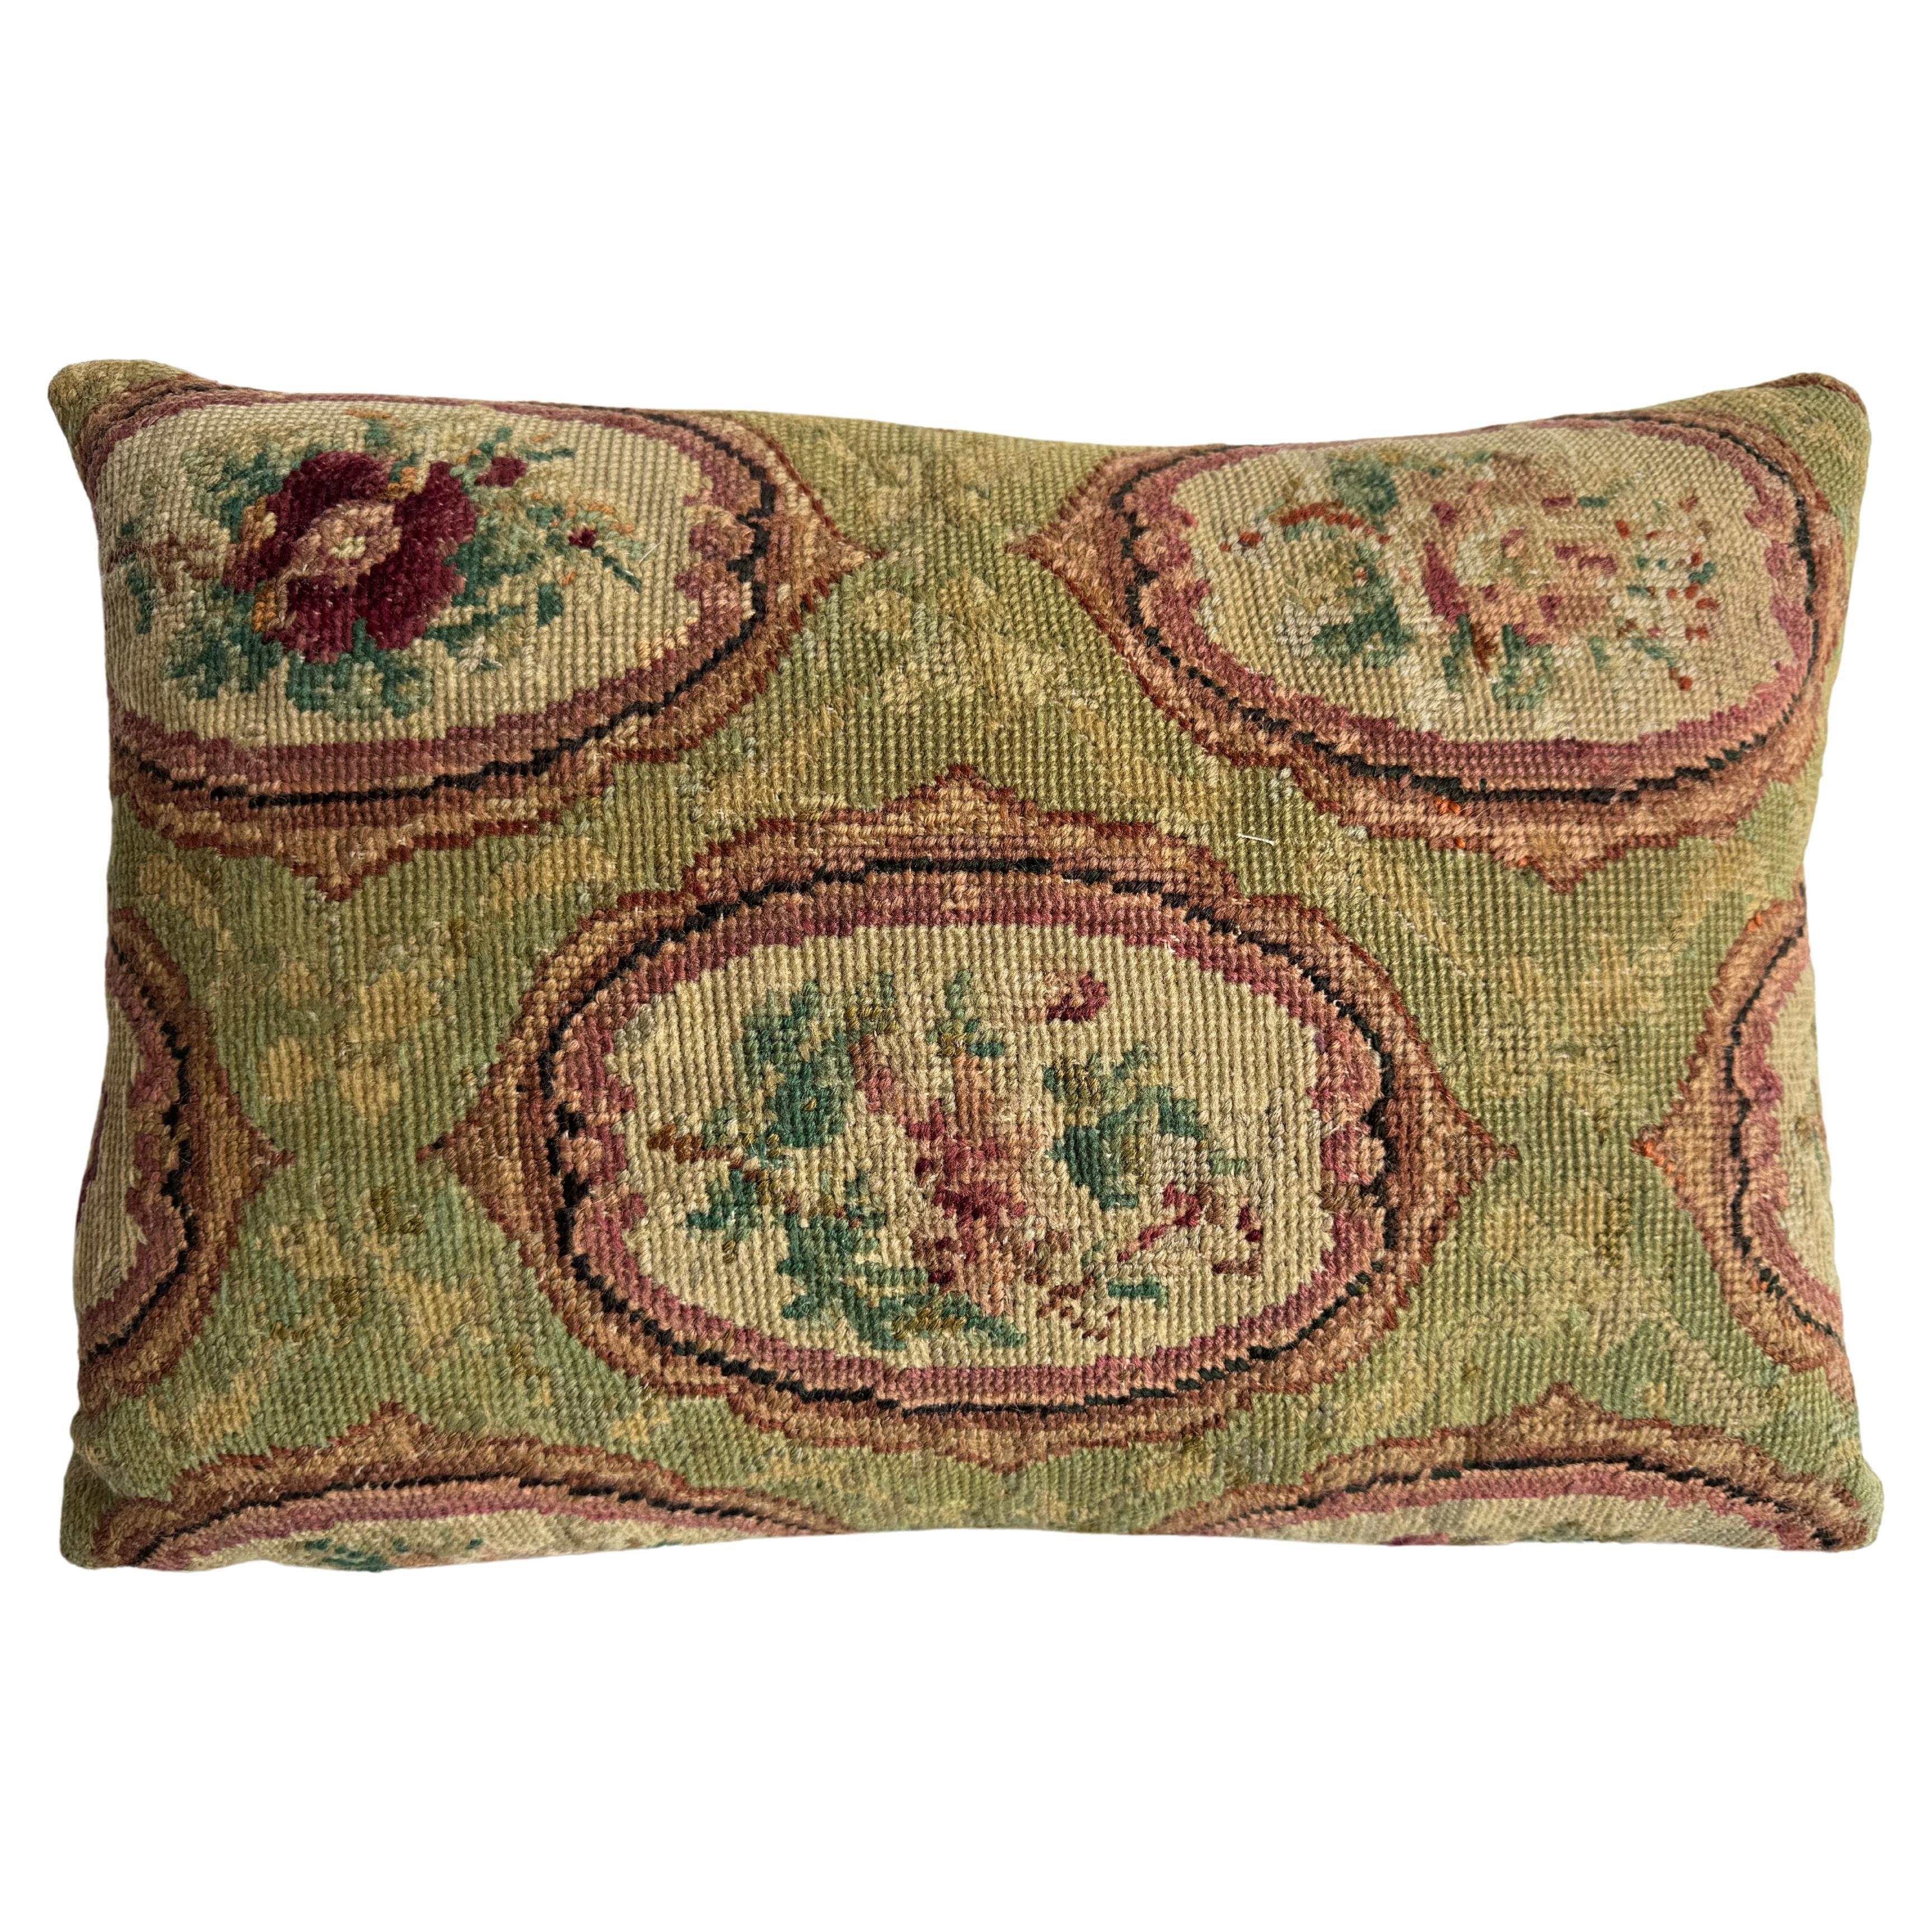 1853 English Needlework 12" x 18" Pillow For Sale